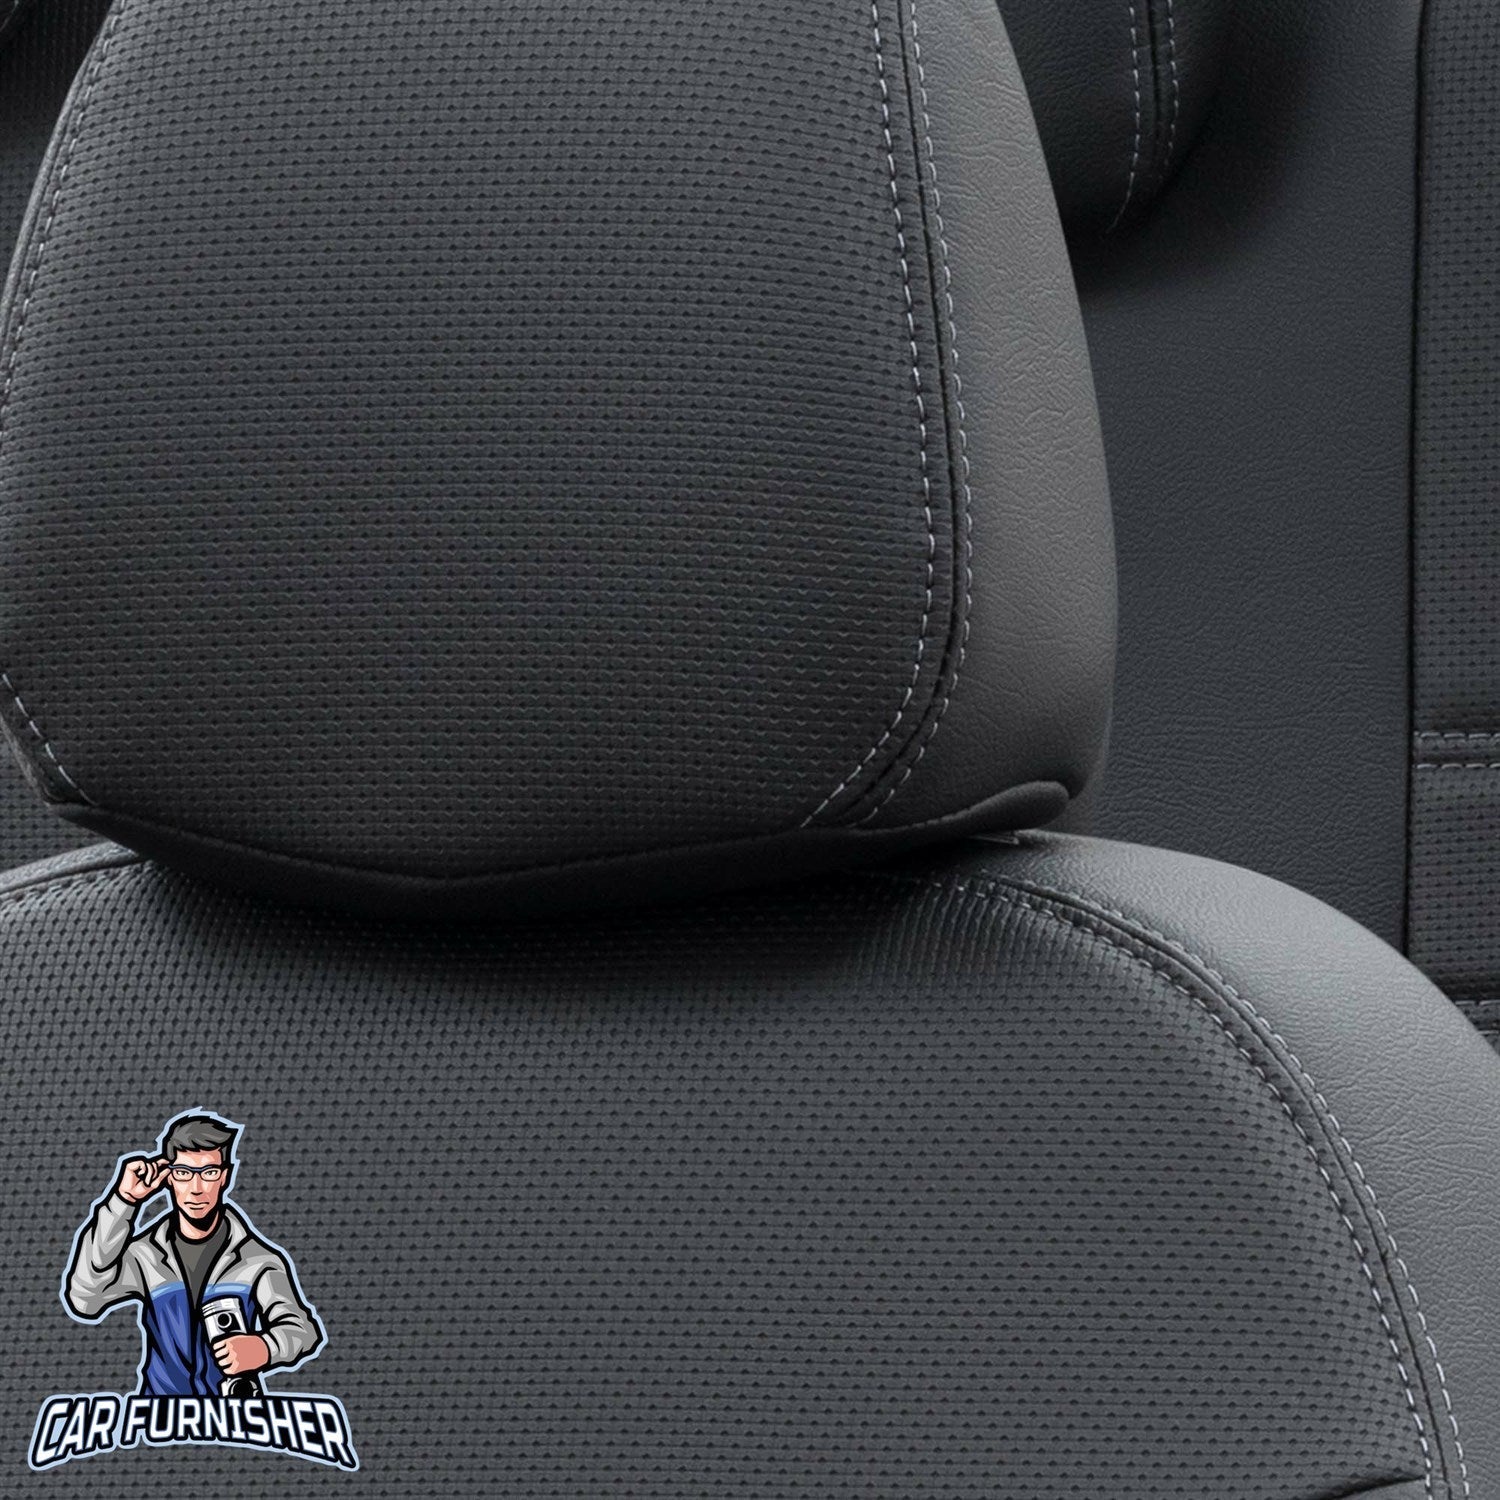 Skoda Scala Seat Covers New York Leather Design Black Leather